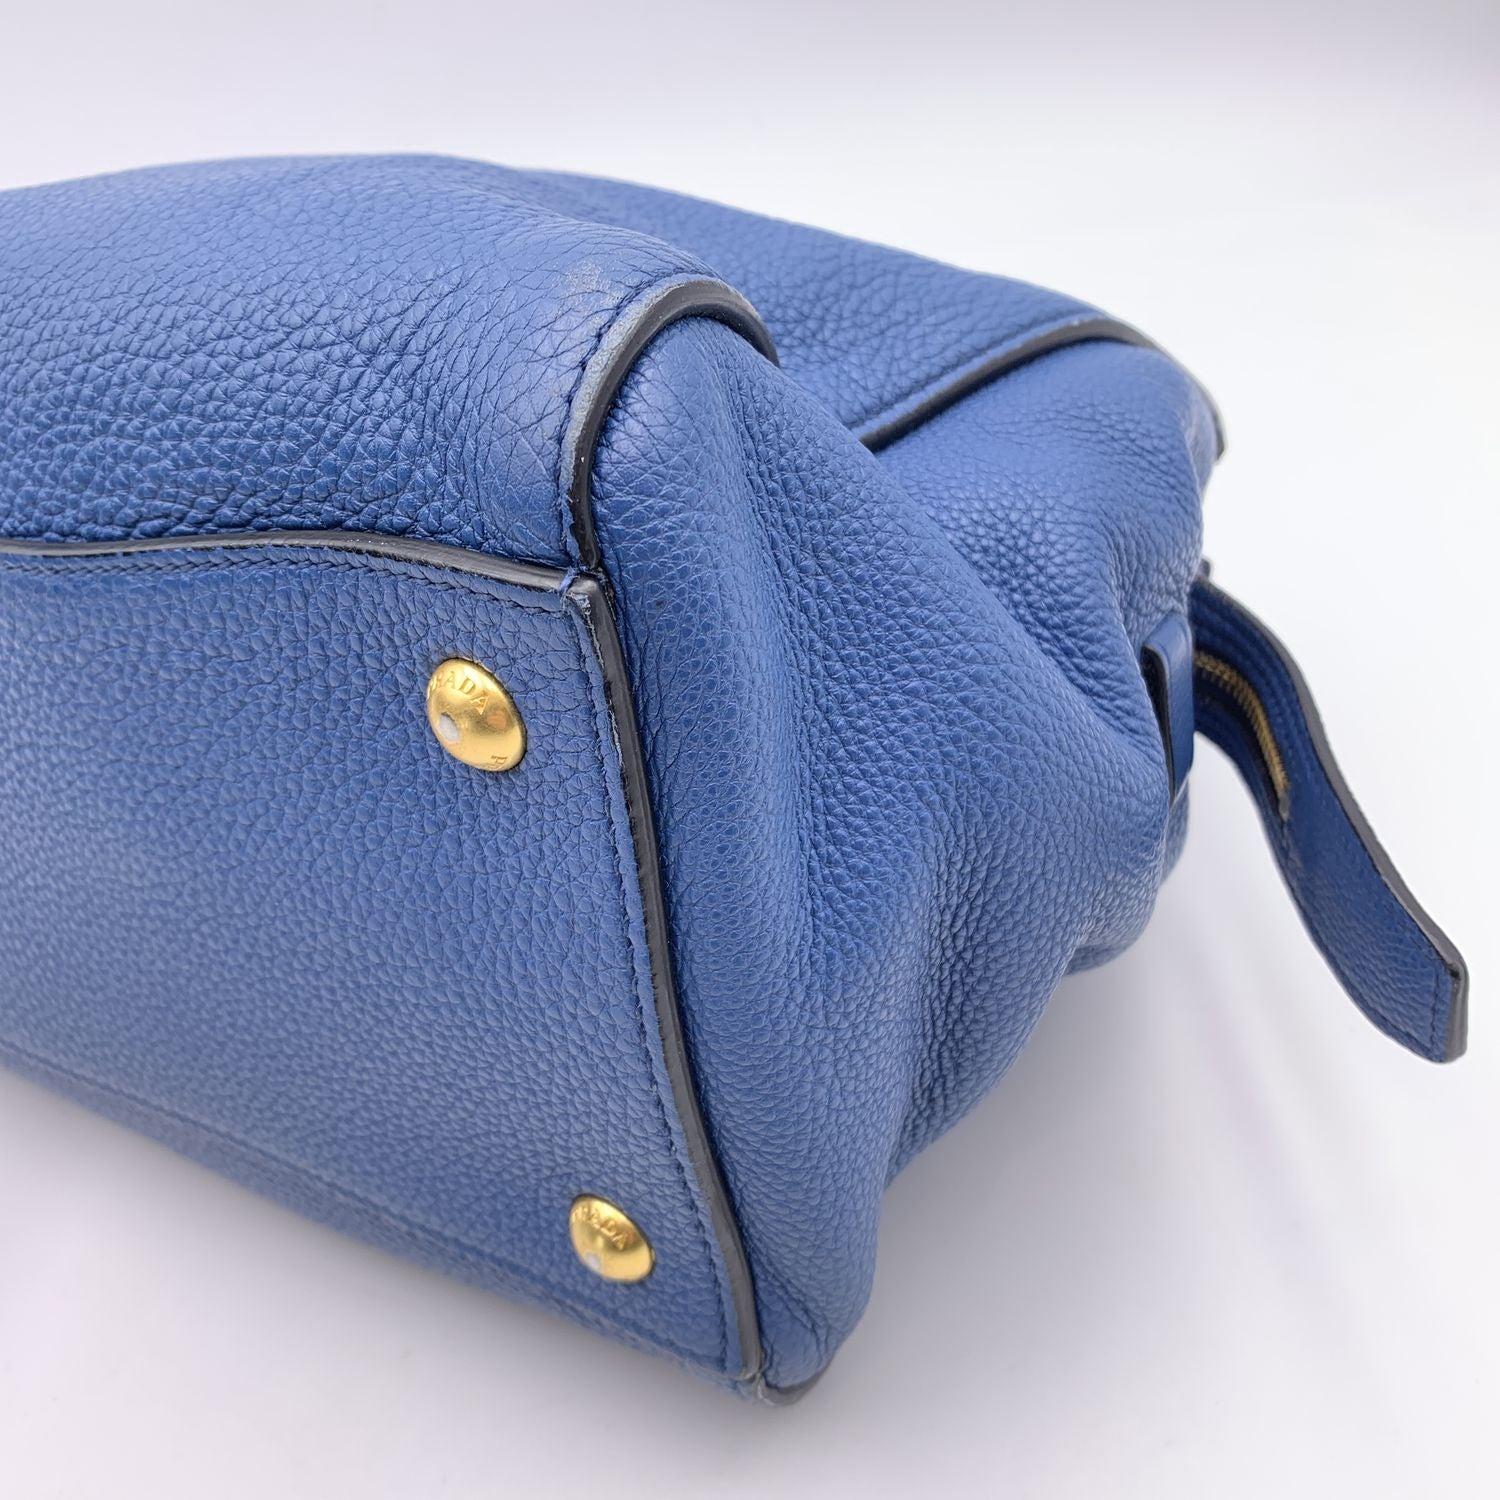 Prada Inchiostro Blue Leather Double Handle Tote Bag BN2767 3